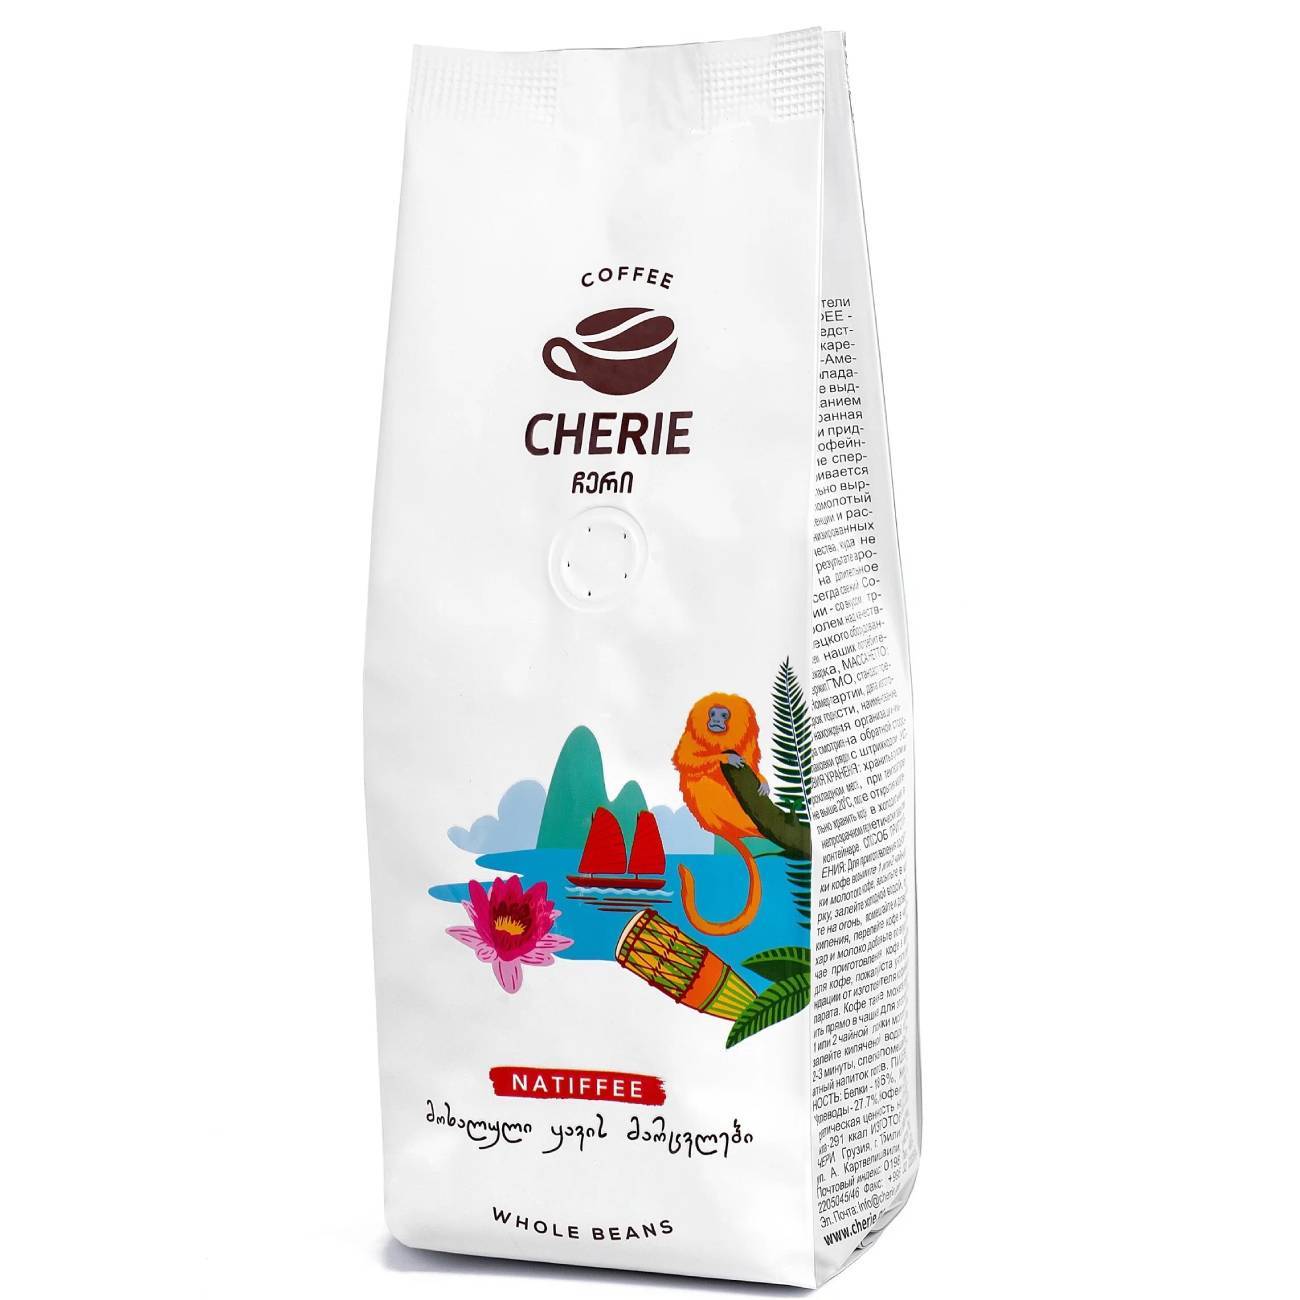 Кофе Cherie зерно натиффее, 1 кг